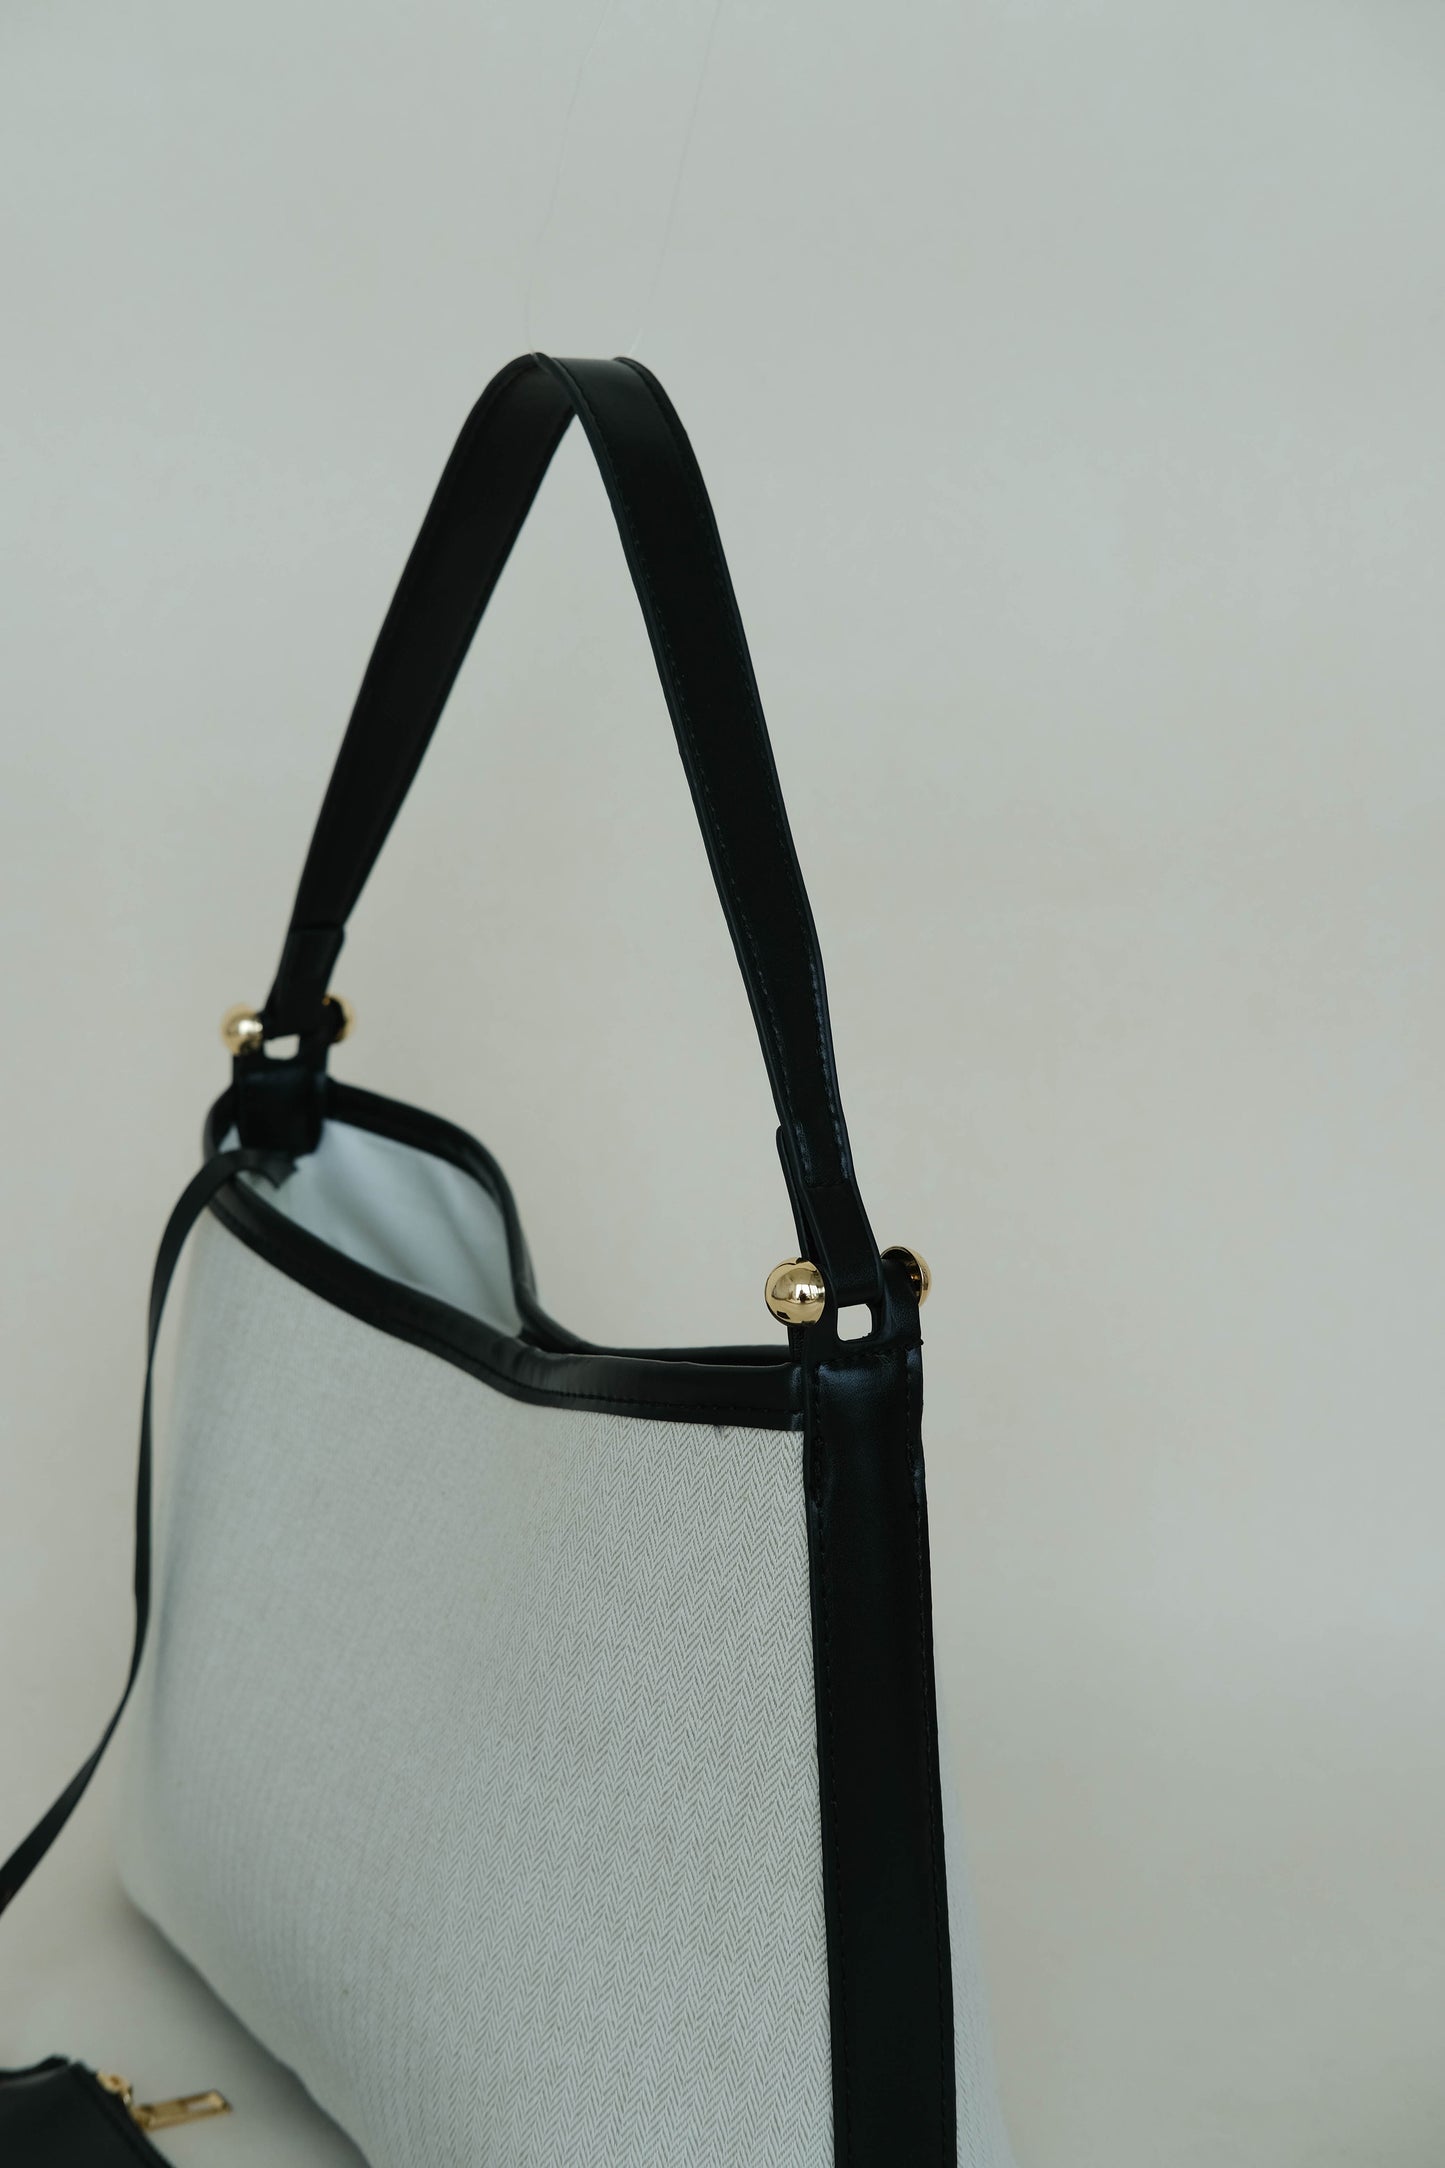 Canvas shoulder bag elegant handbag